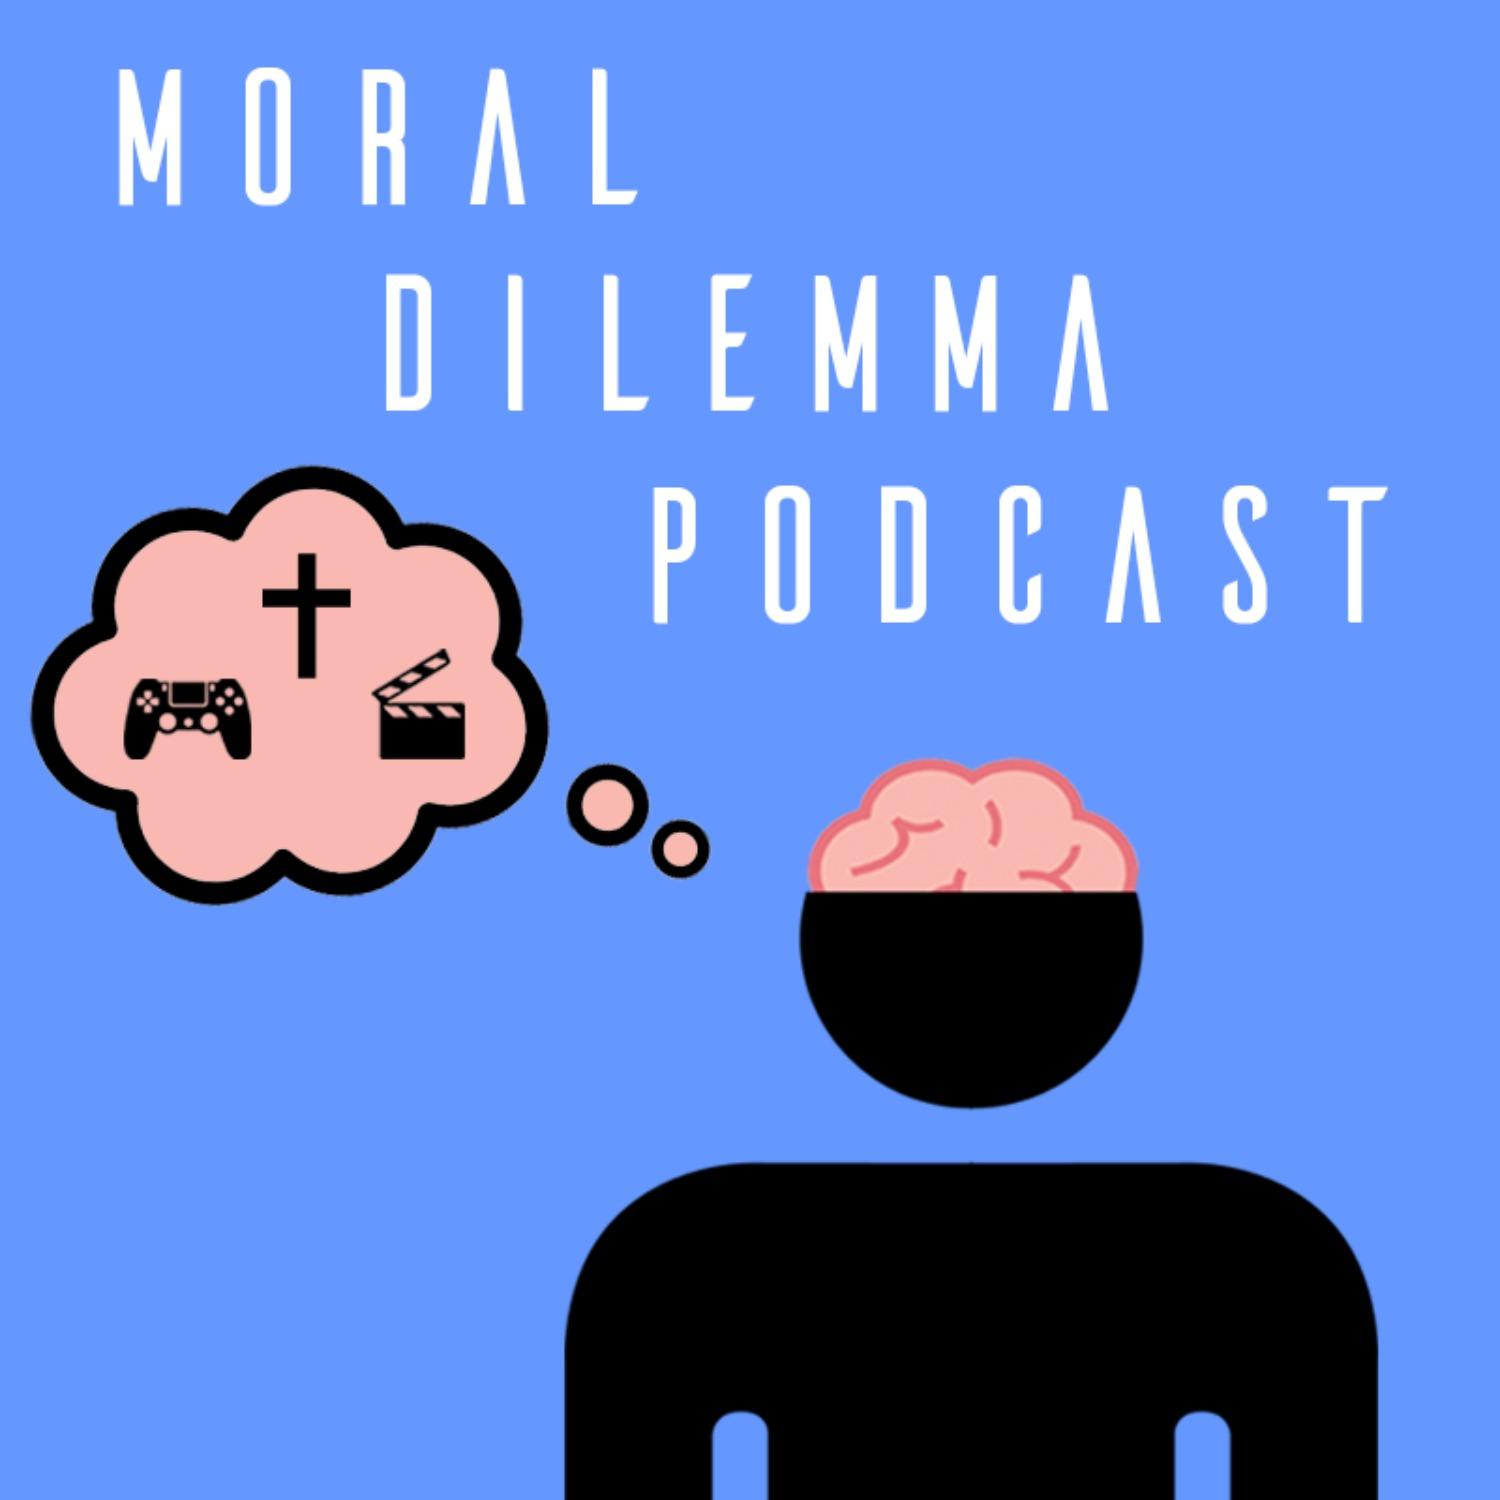 The Moral Dilemma Podcast